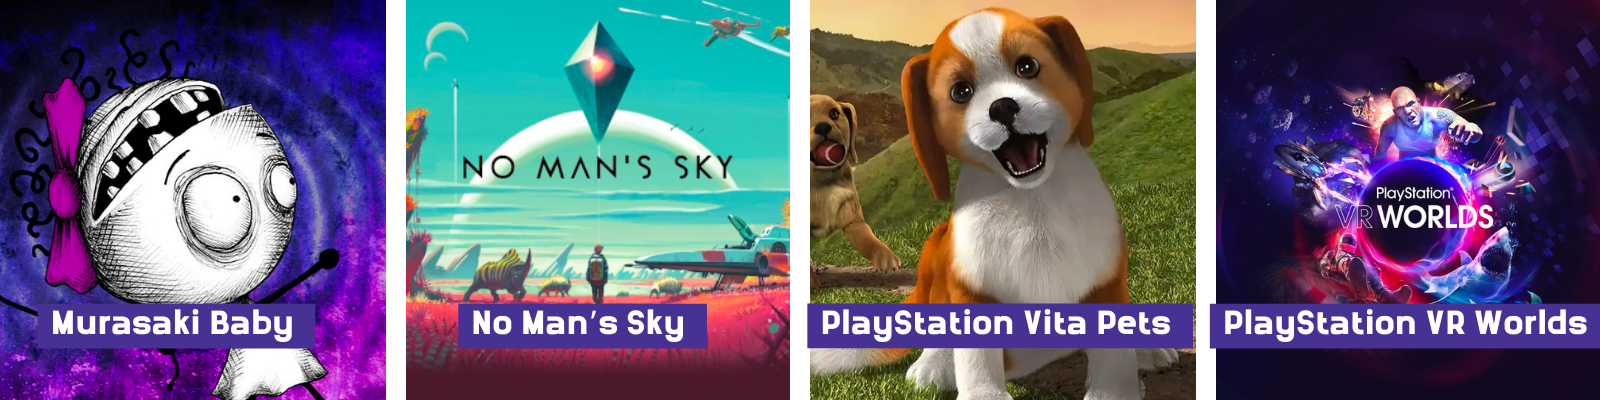 Murasaki Baby, No Mans Sky, PS Vita Pets, Playstation VR Worlds